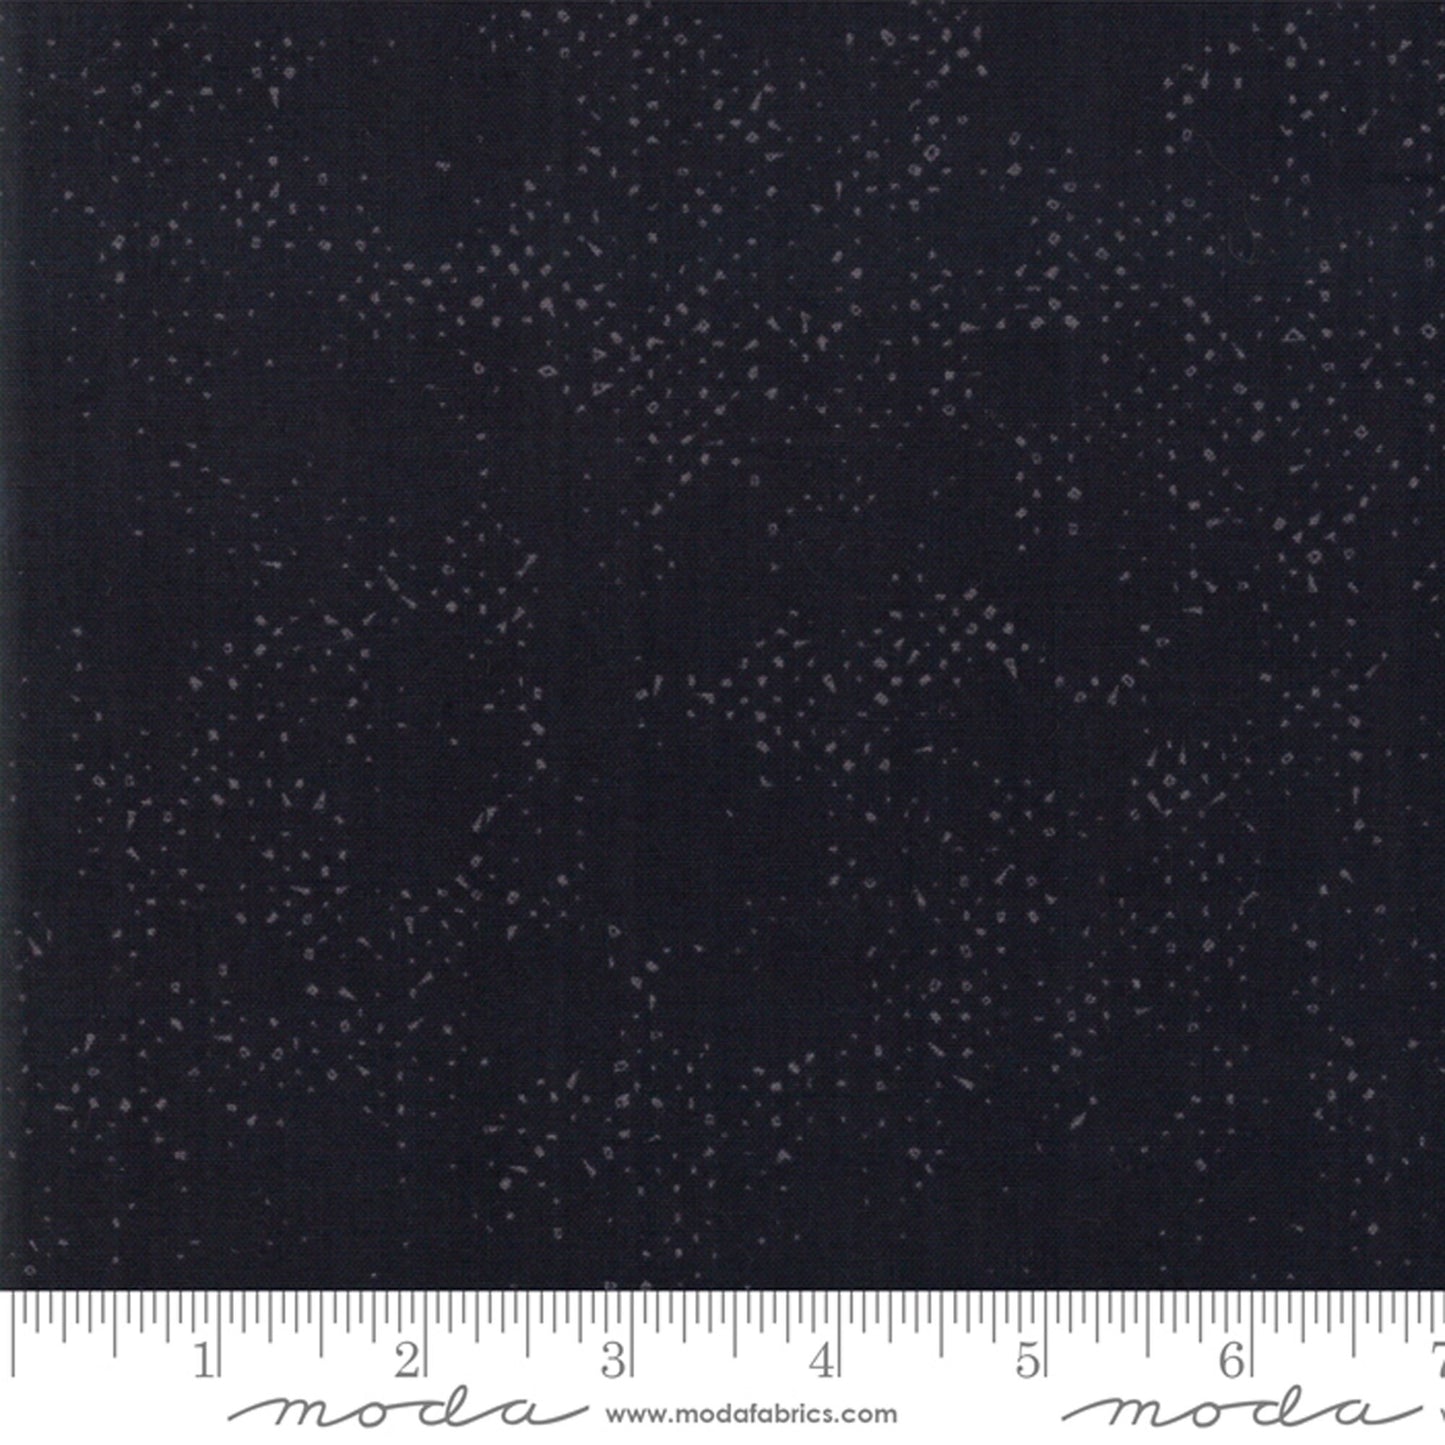 Spotted - Jet Black Tonal Dots Fabric, Moda 1660 90, Zen Chic Black Gray Texture Blender Fabric, Black Tone on Tone, By the Yard